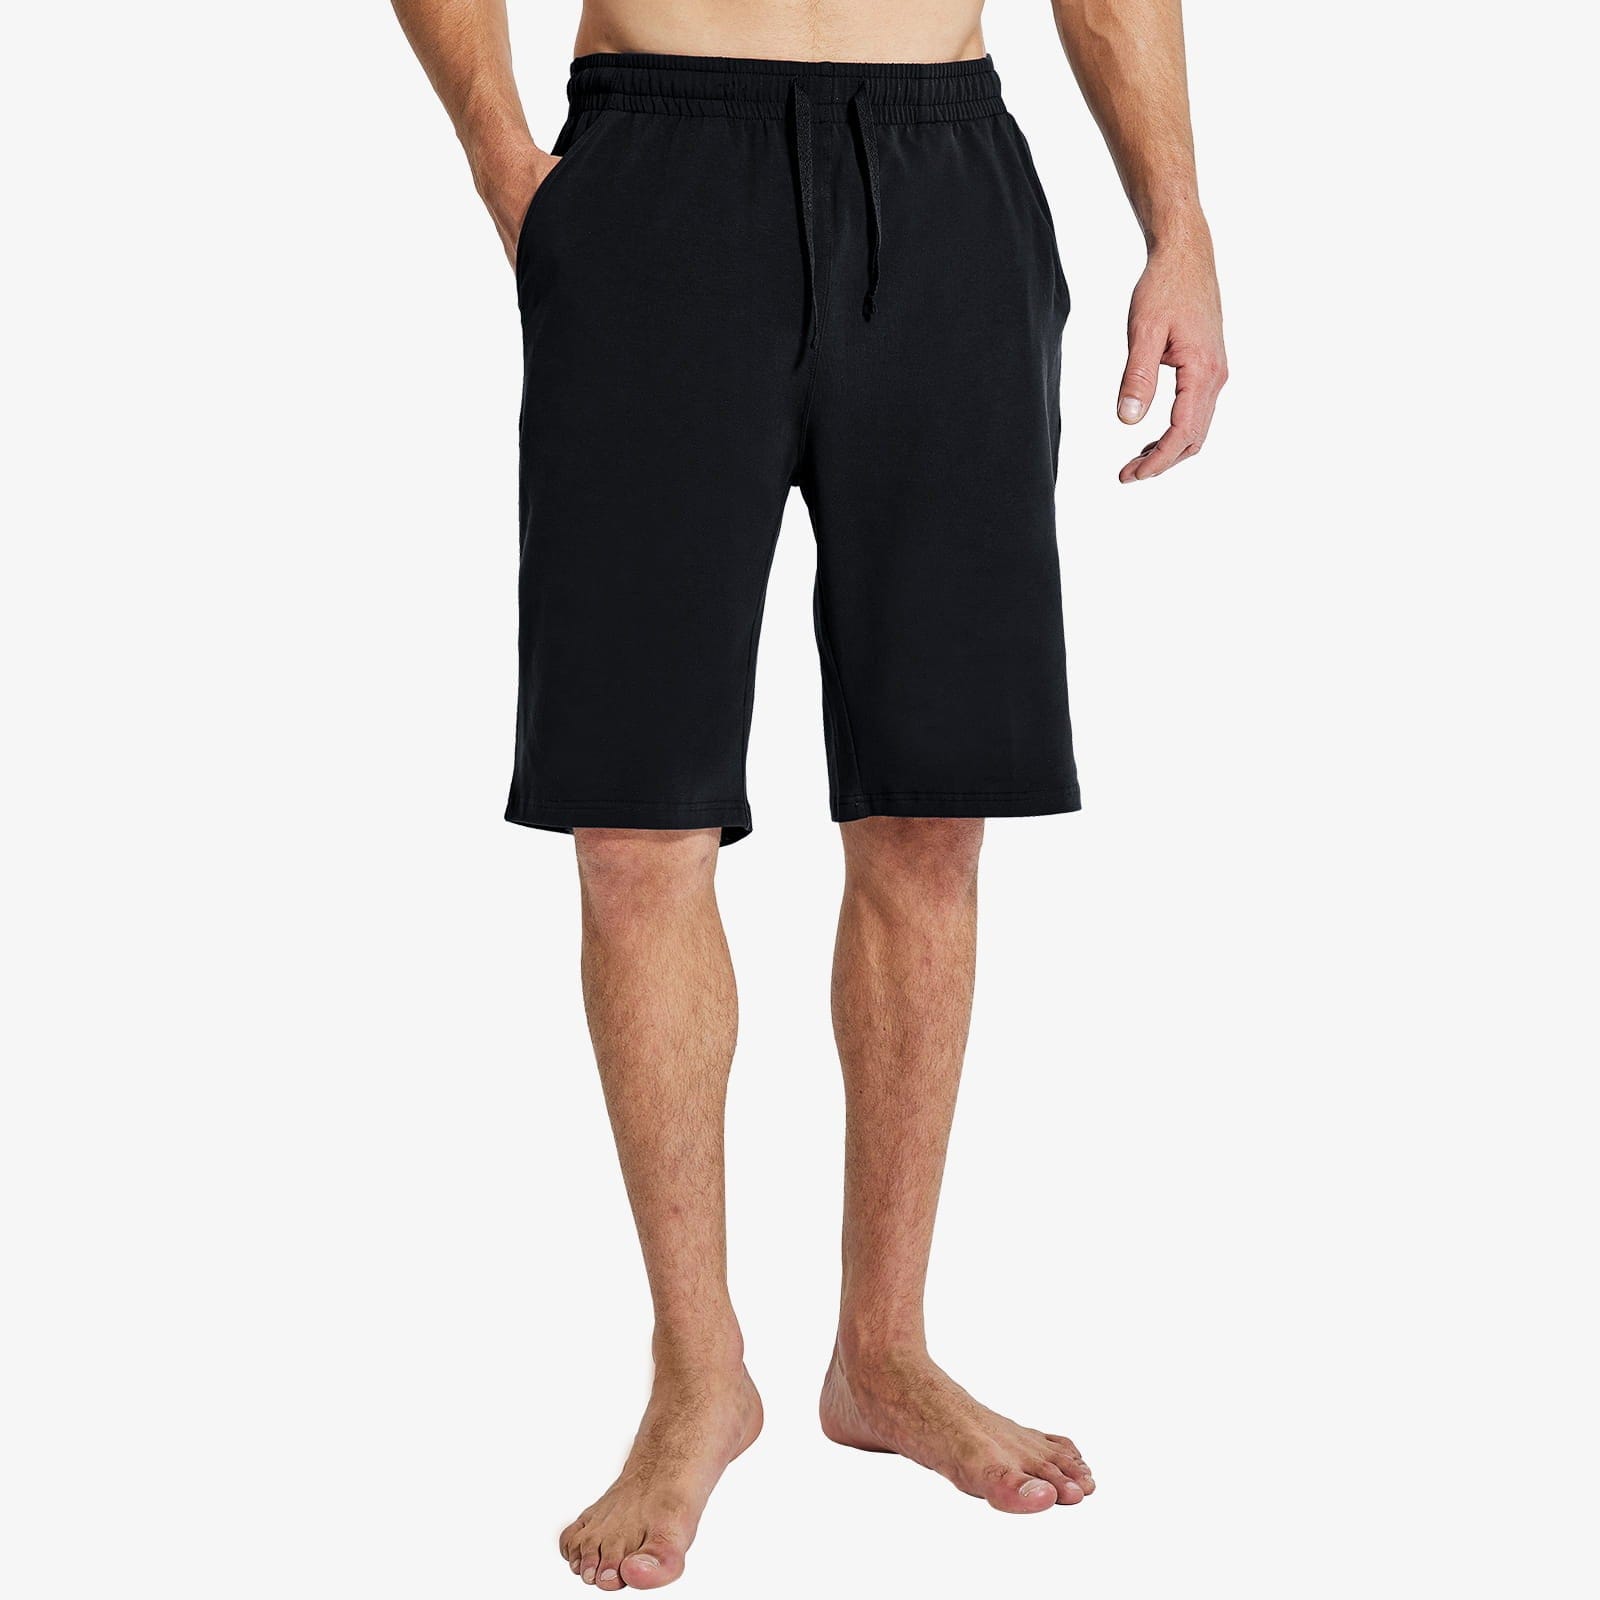 Men's Workout Cotton Shorts 11'' Long Gym Athletic Knit Shorts - Black / M